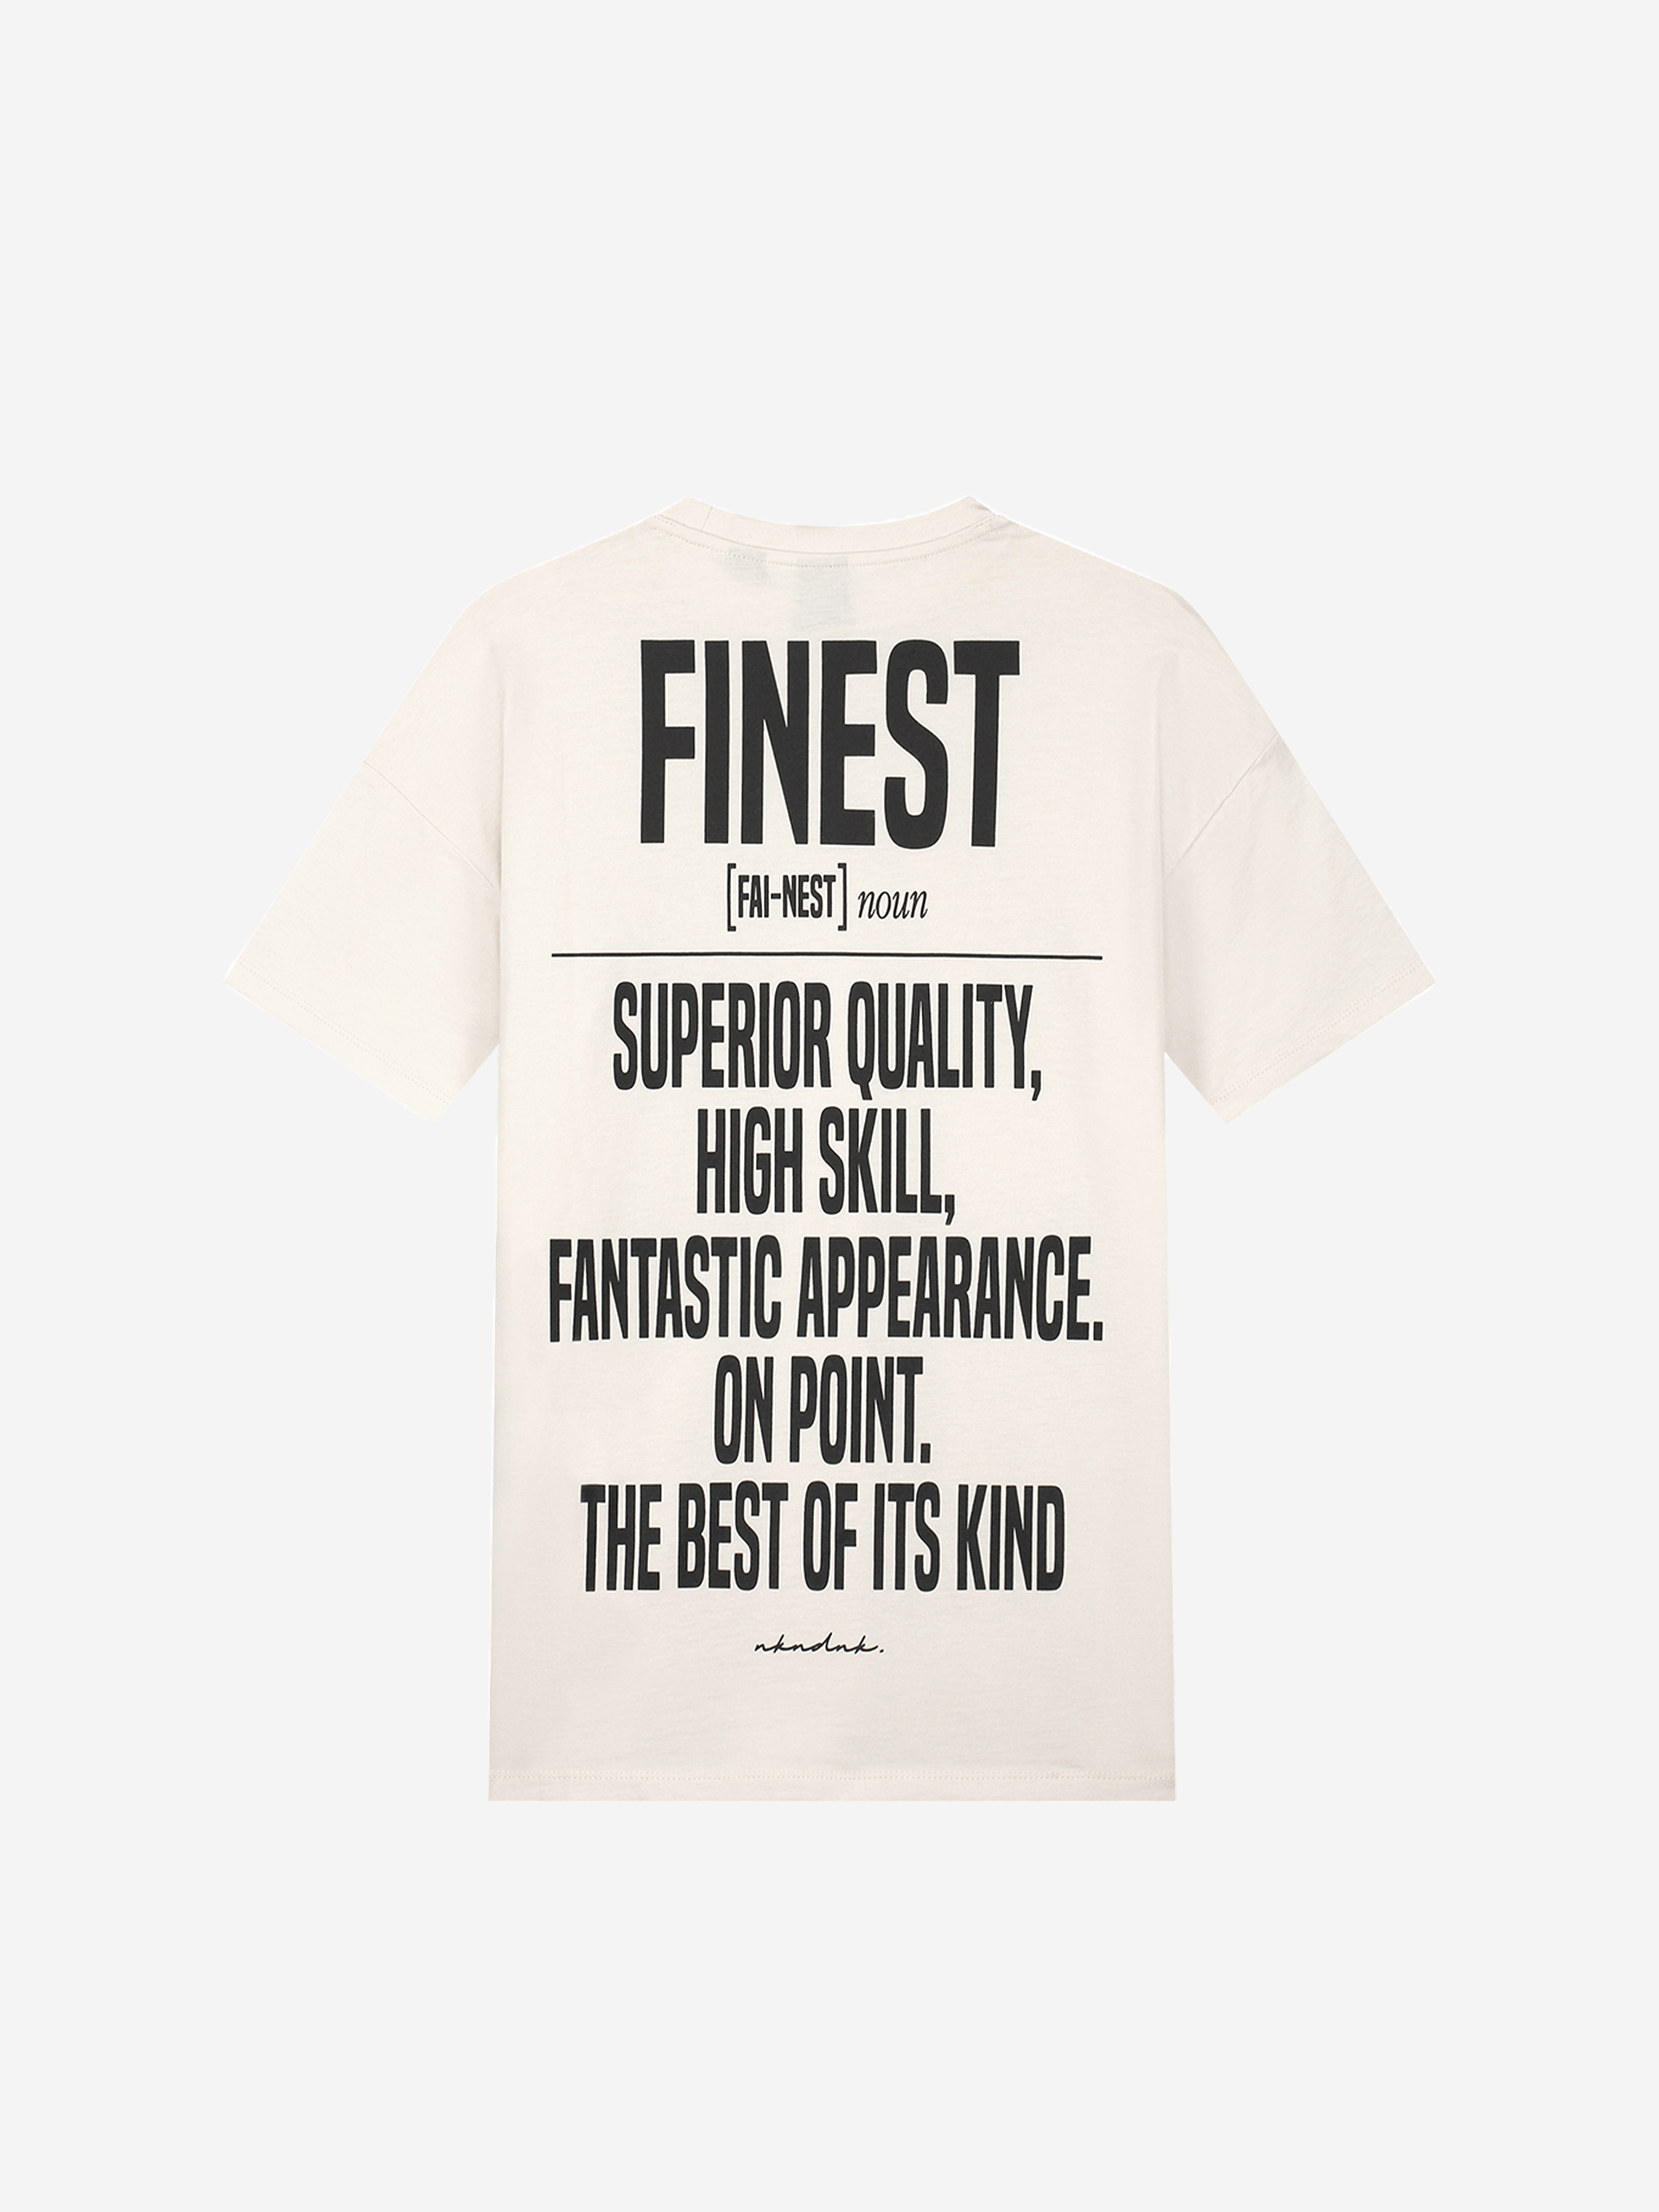 Superior T-Shirt